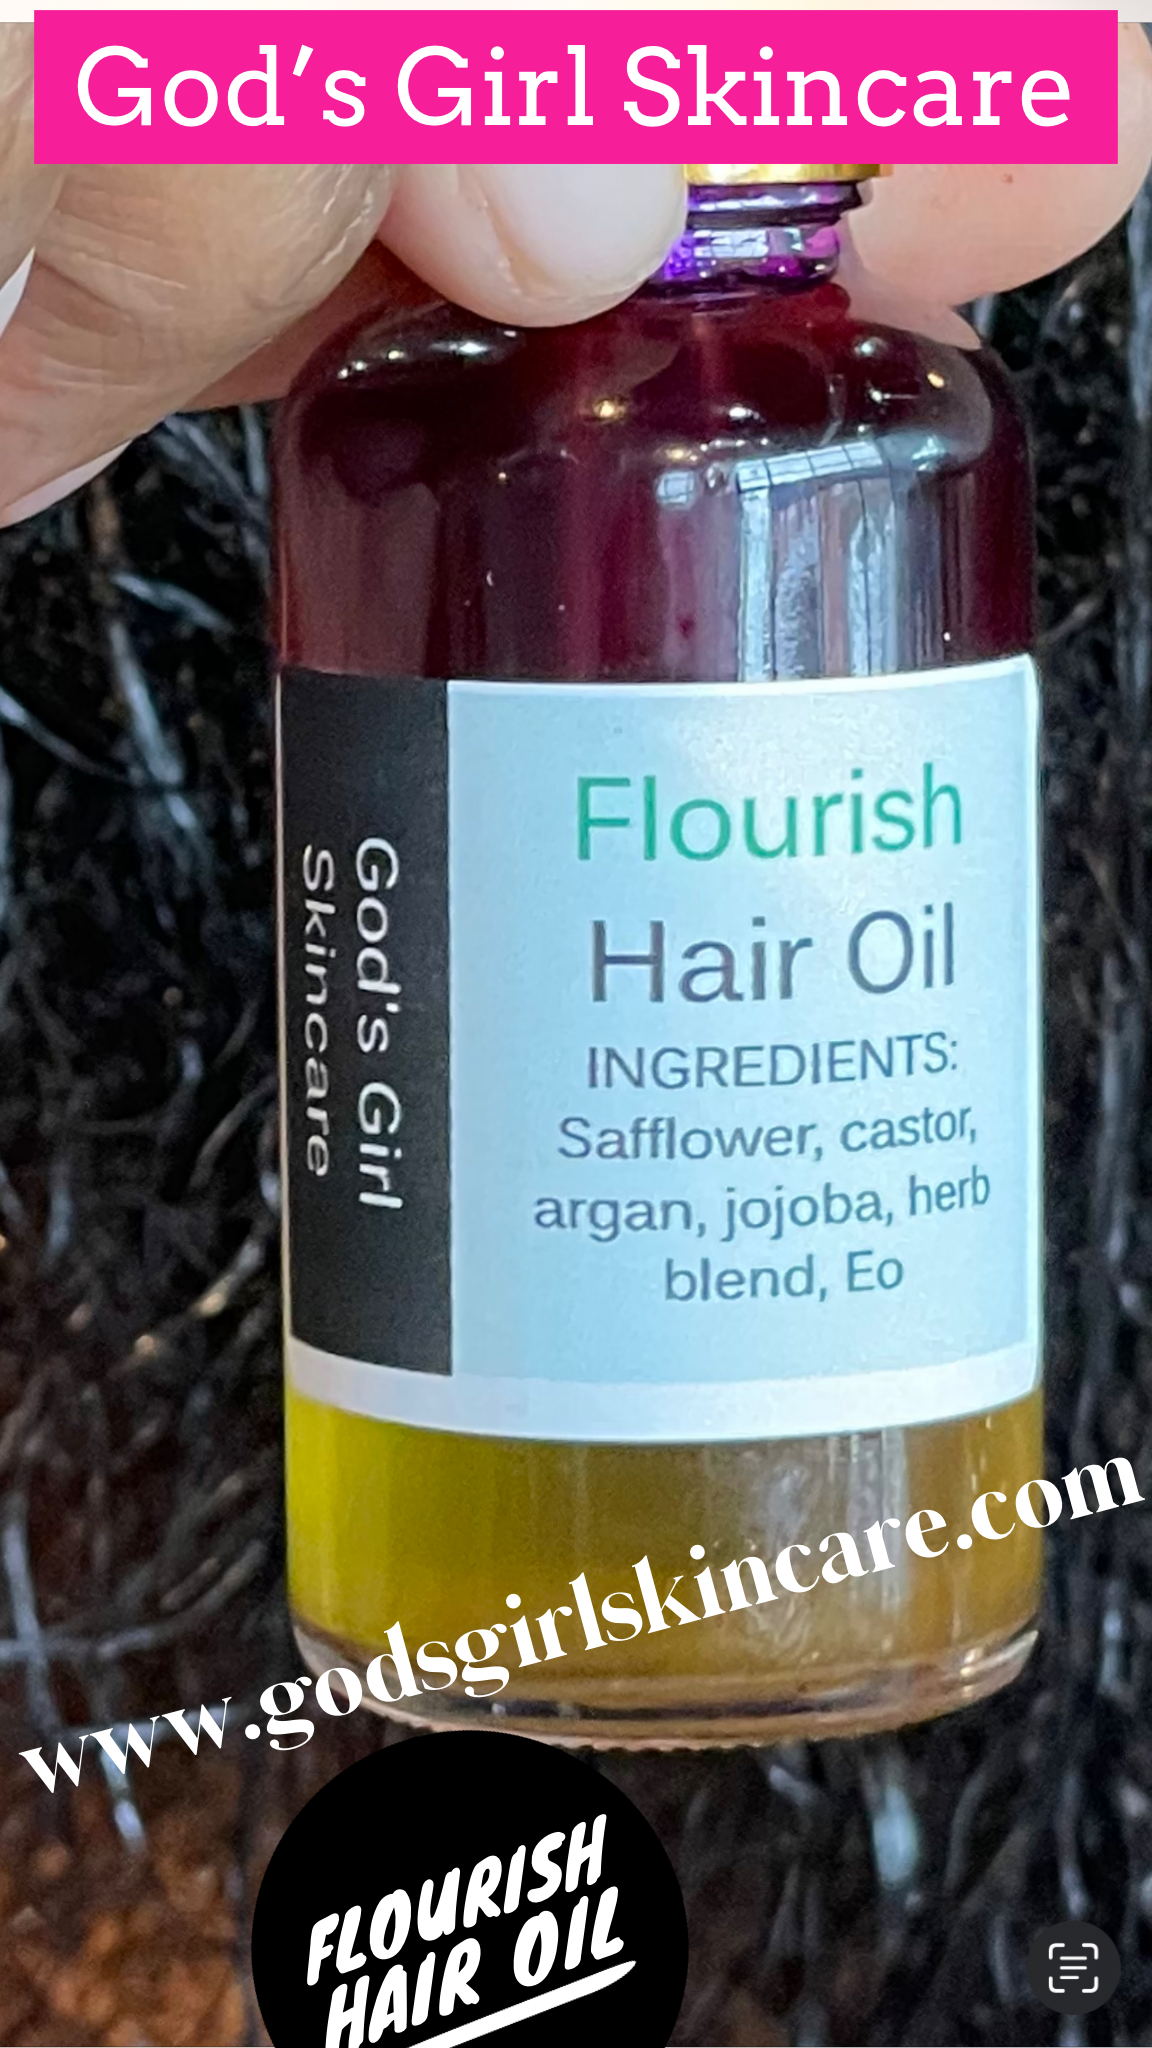 Flourish Hair oil